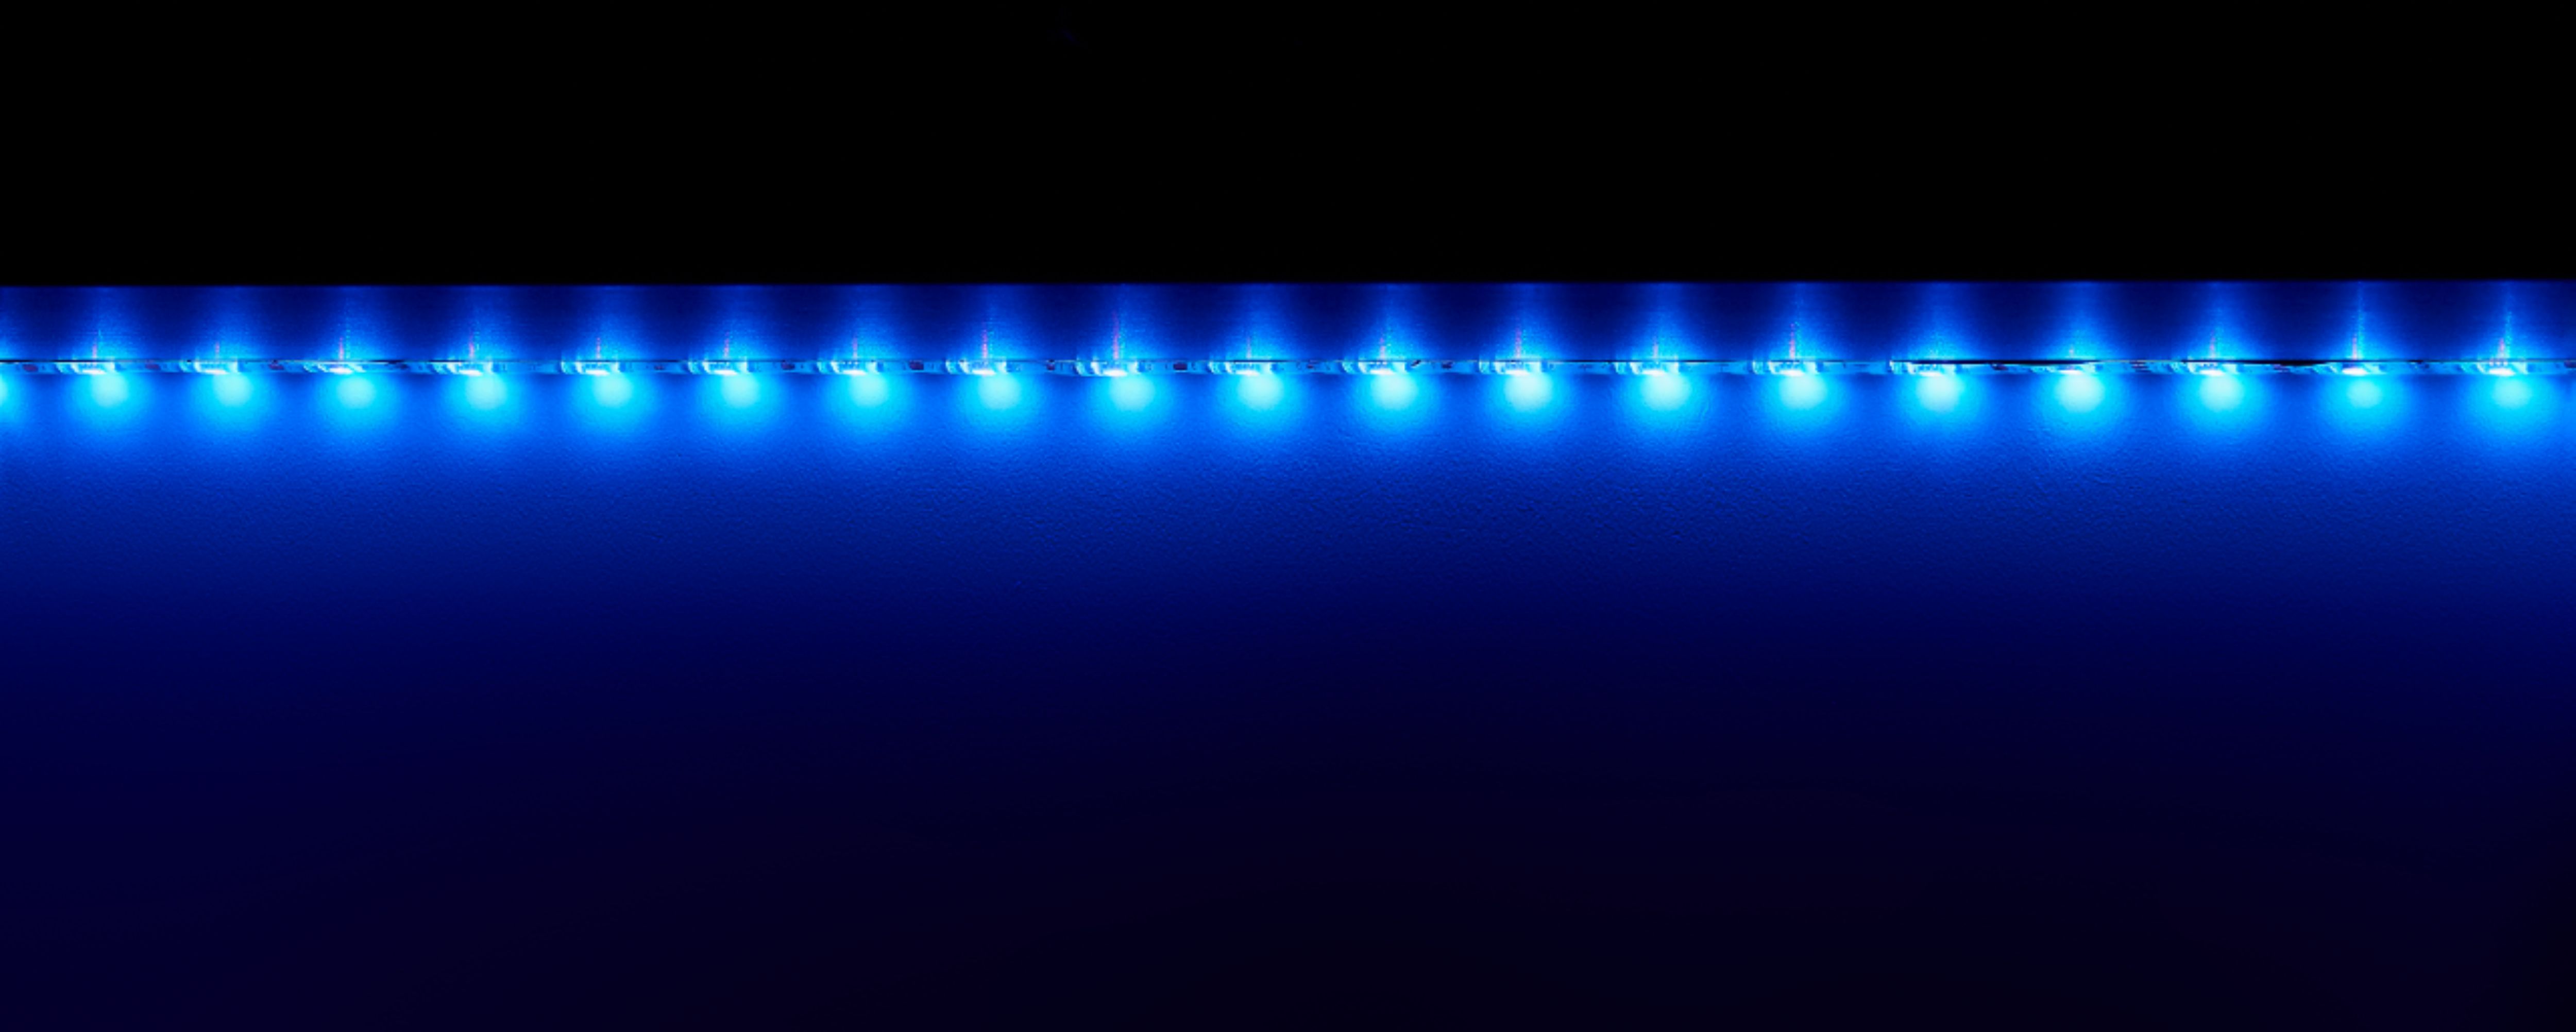 Insignia LED Light Strip - Multi-Color - 8 ft